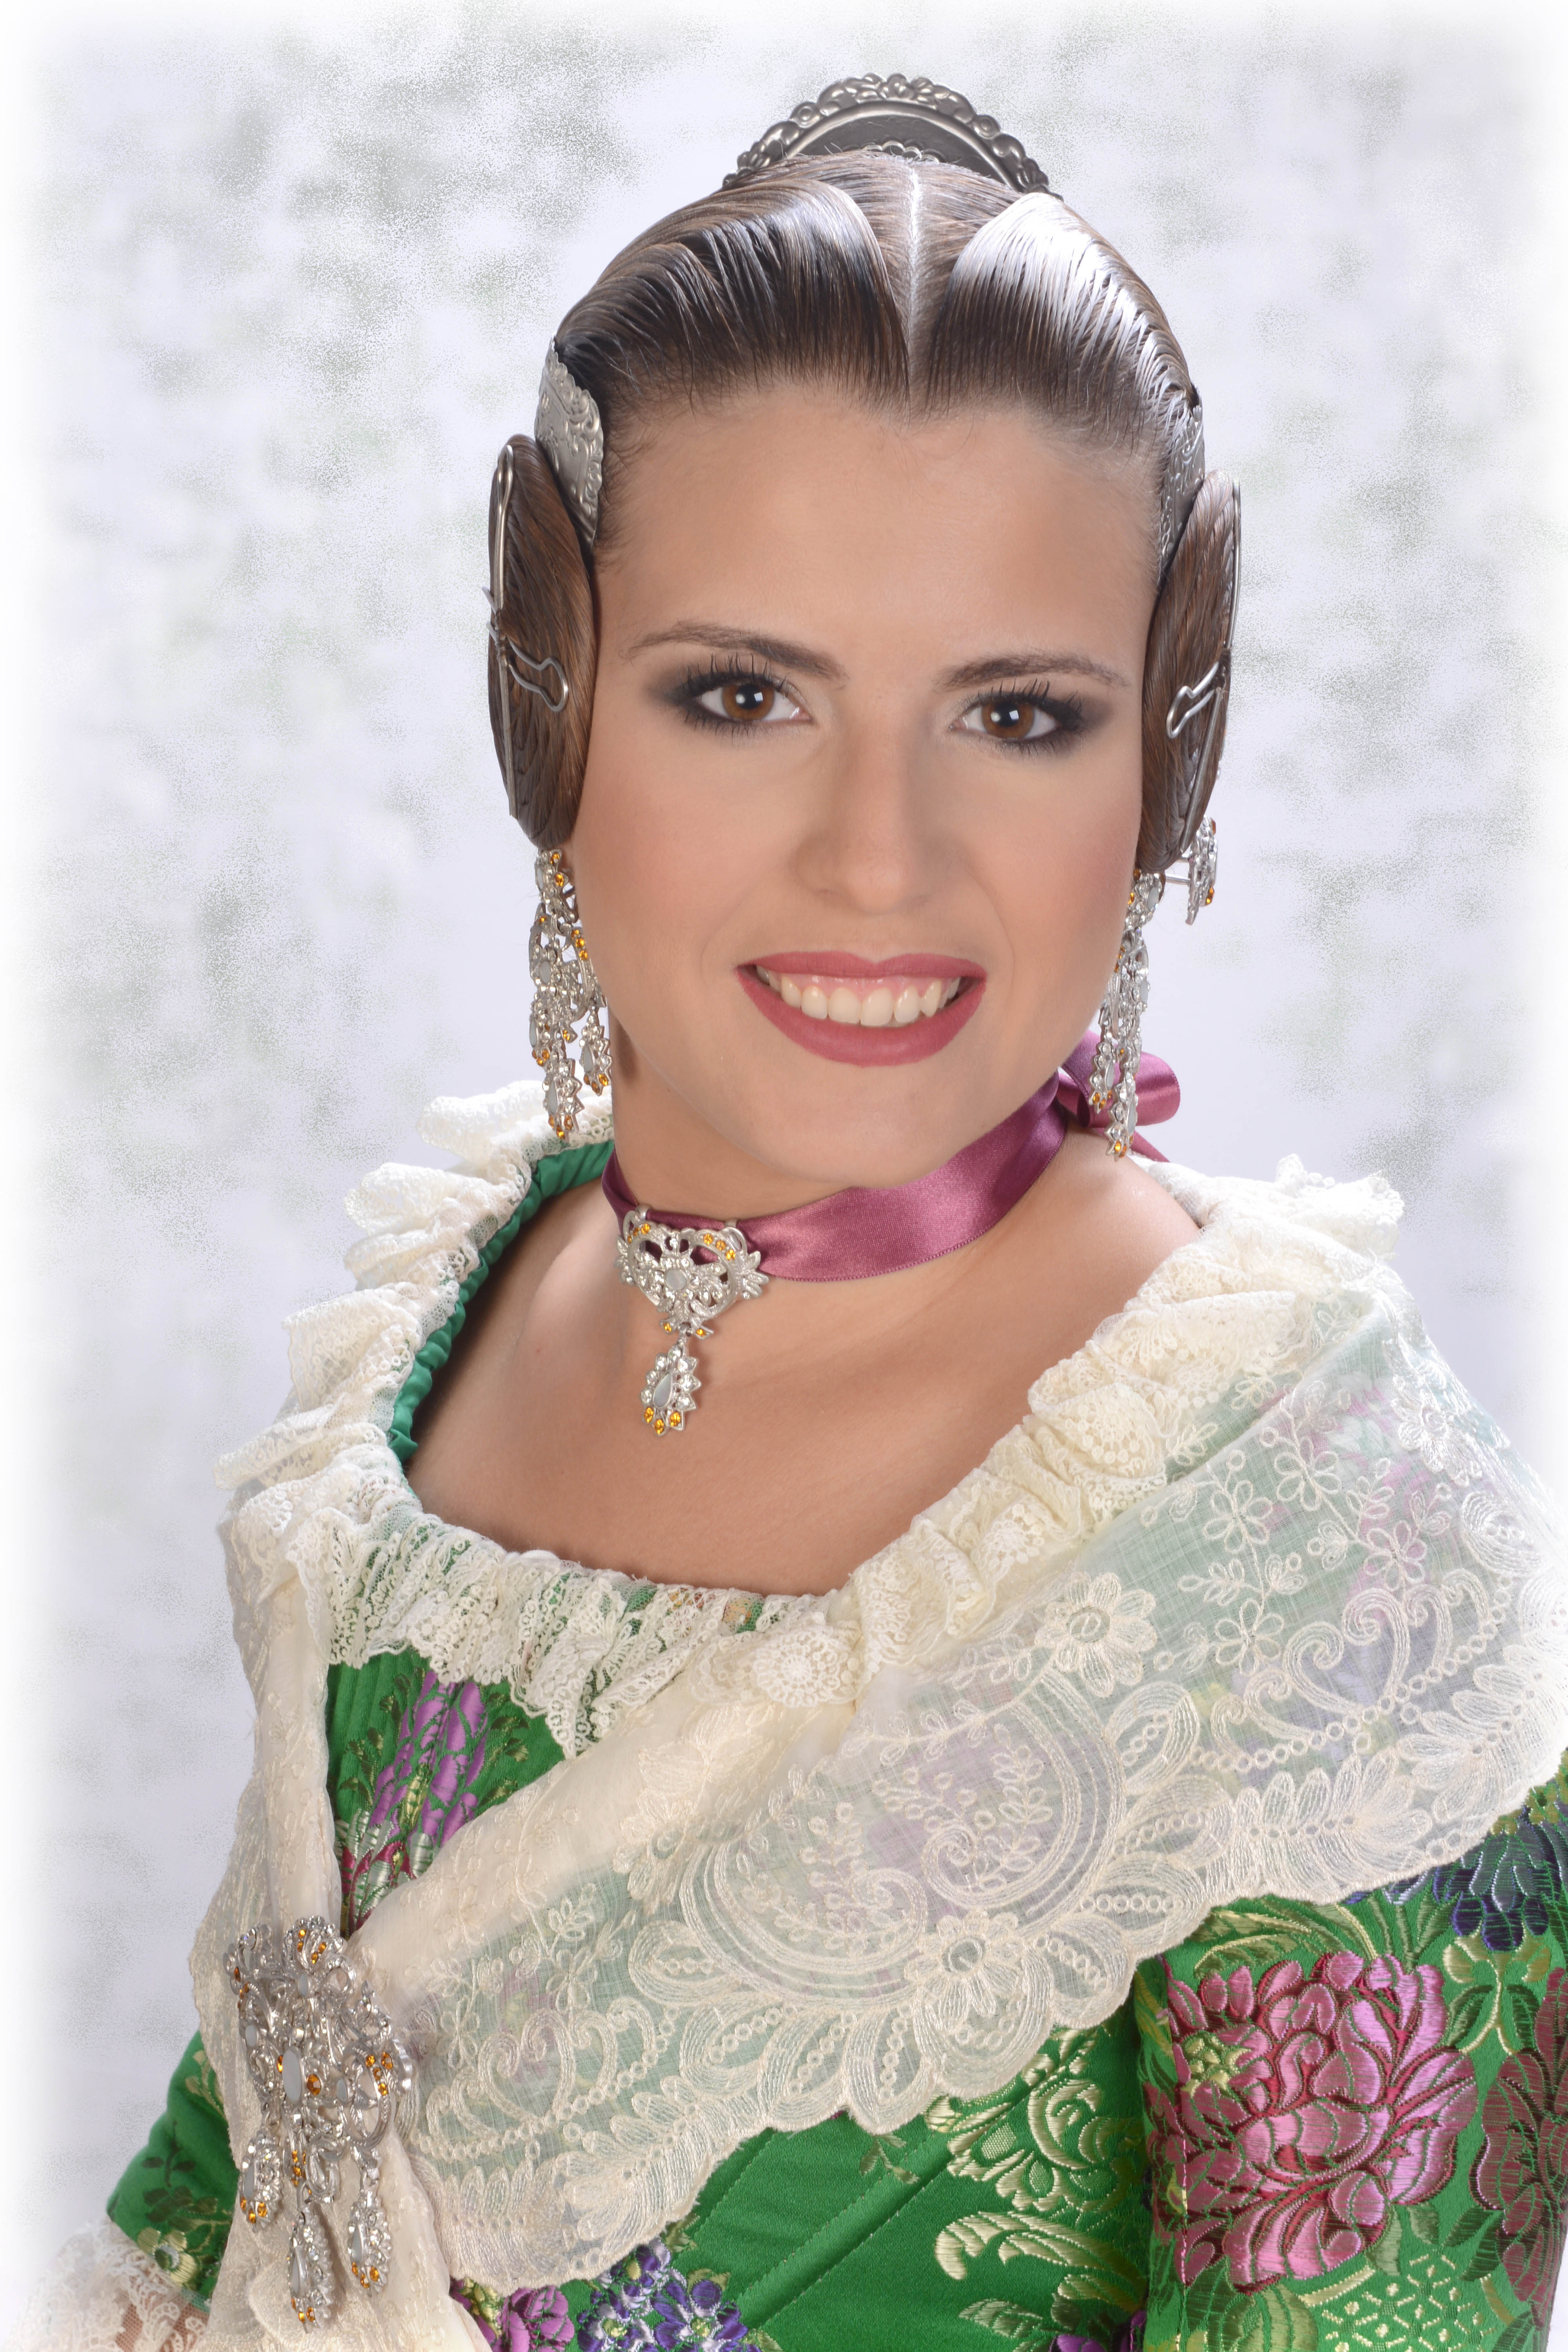 Lucía Montesinos Pérez